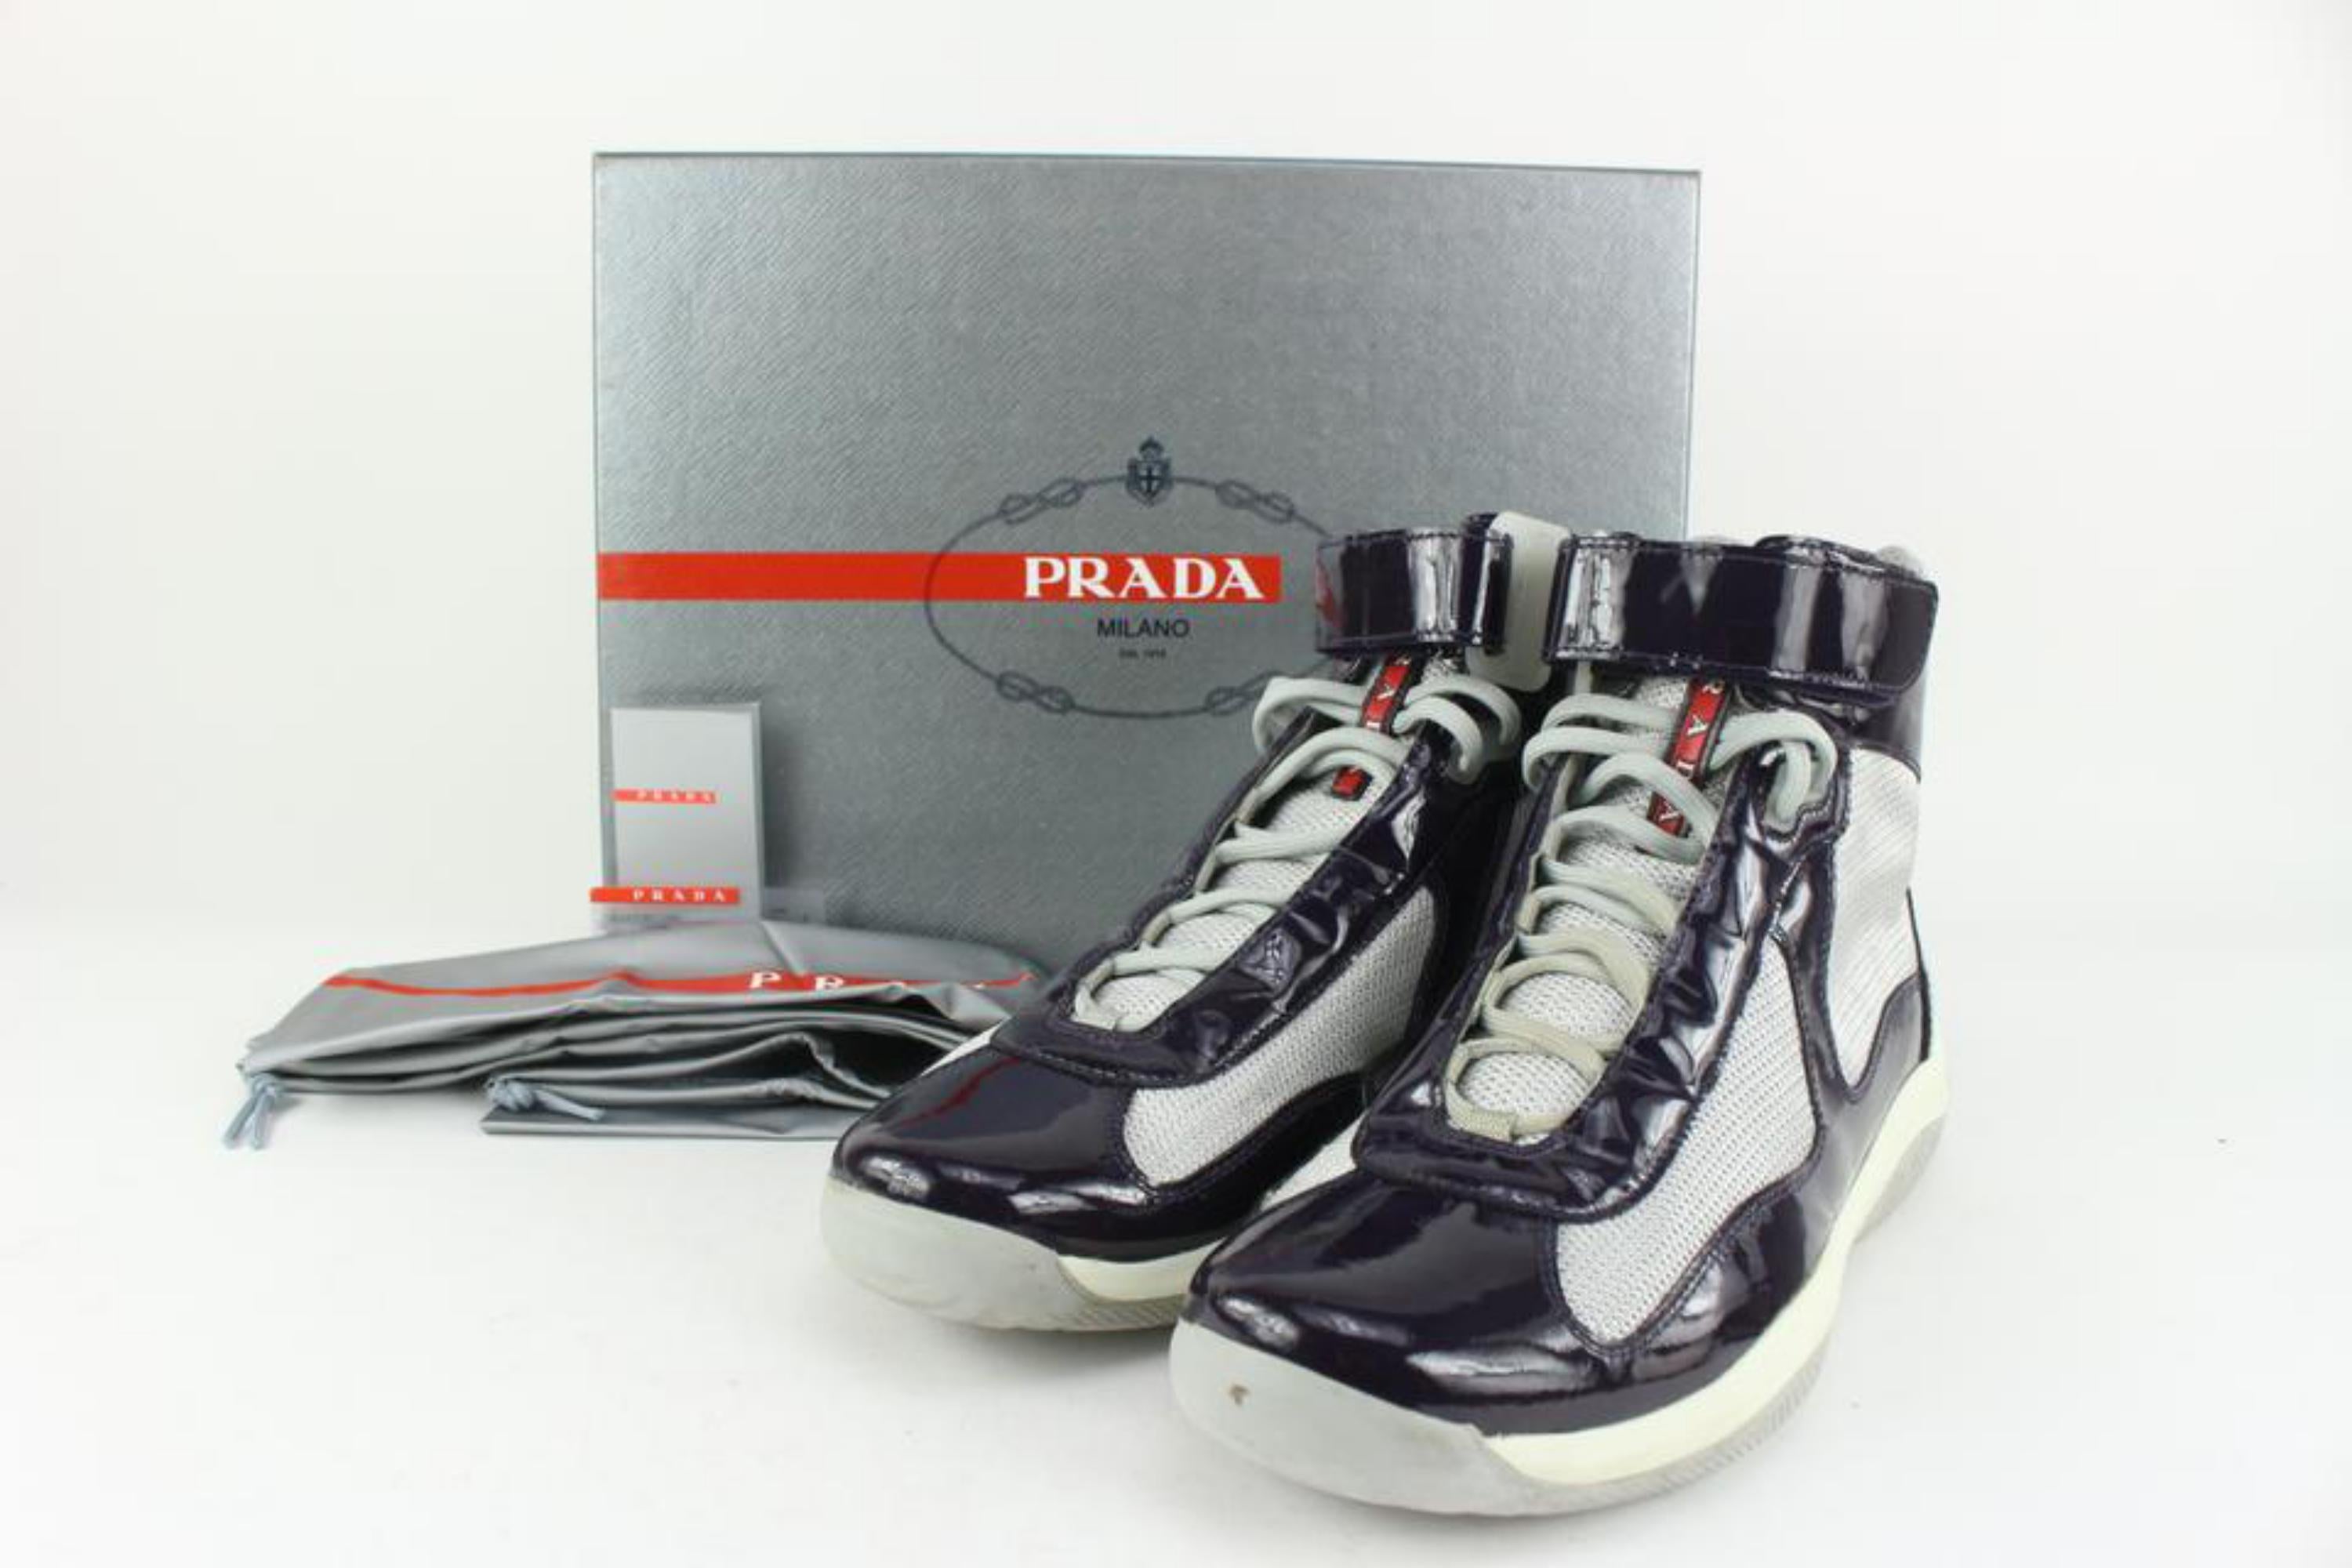 Prada Men 9 America's Cup Patent Leather Vernice Bike Sneaker 4T0341 1116p49 4